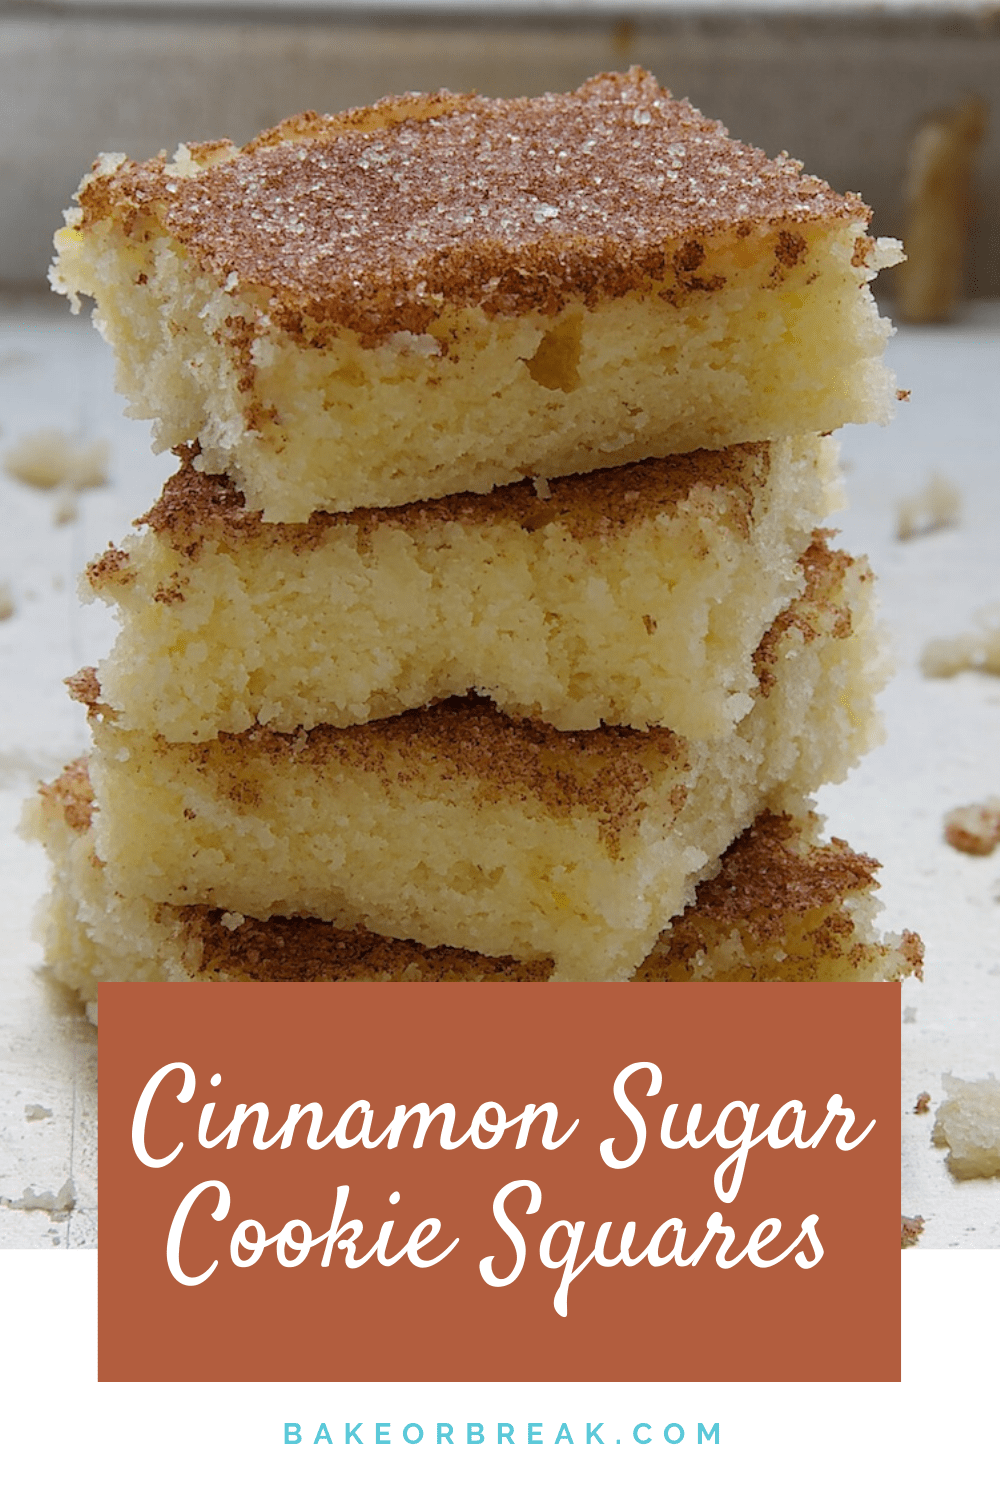 Cinnamon sugar cookie squares Pinterest image.